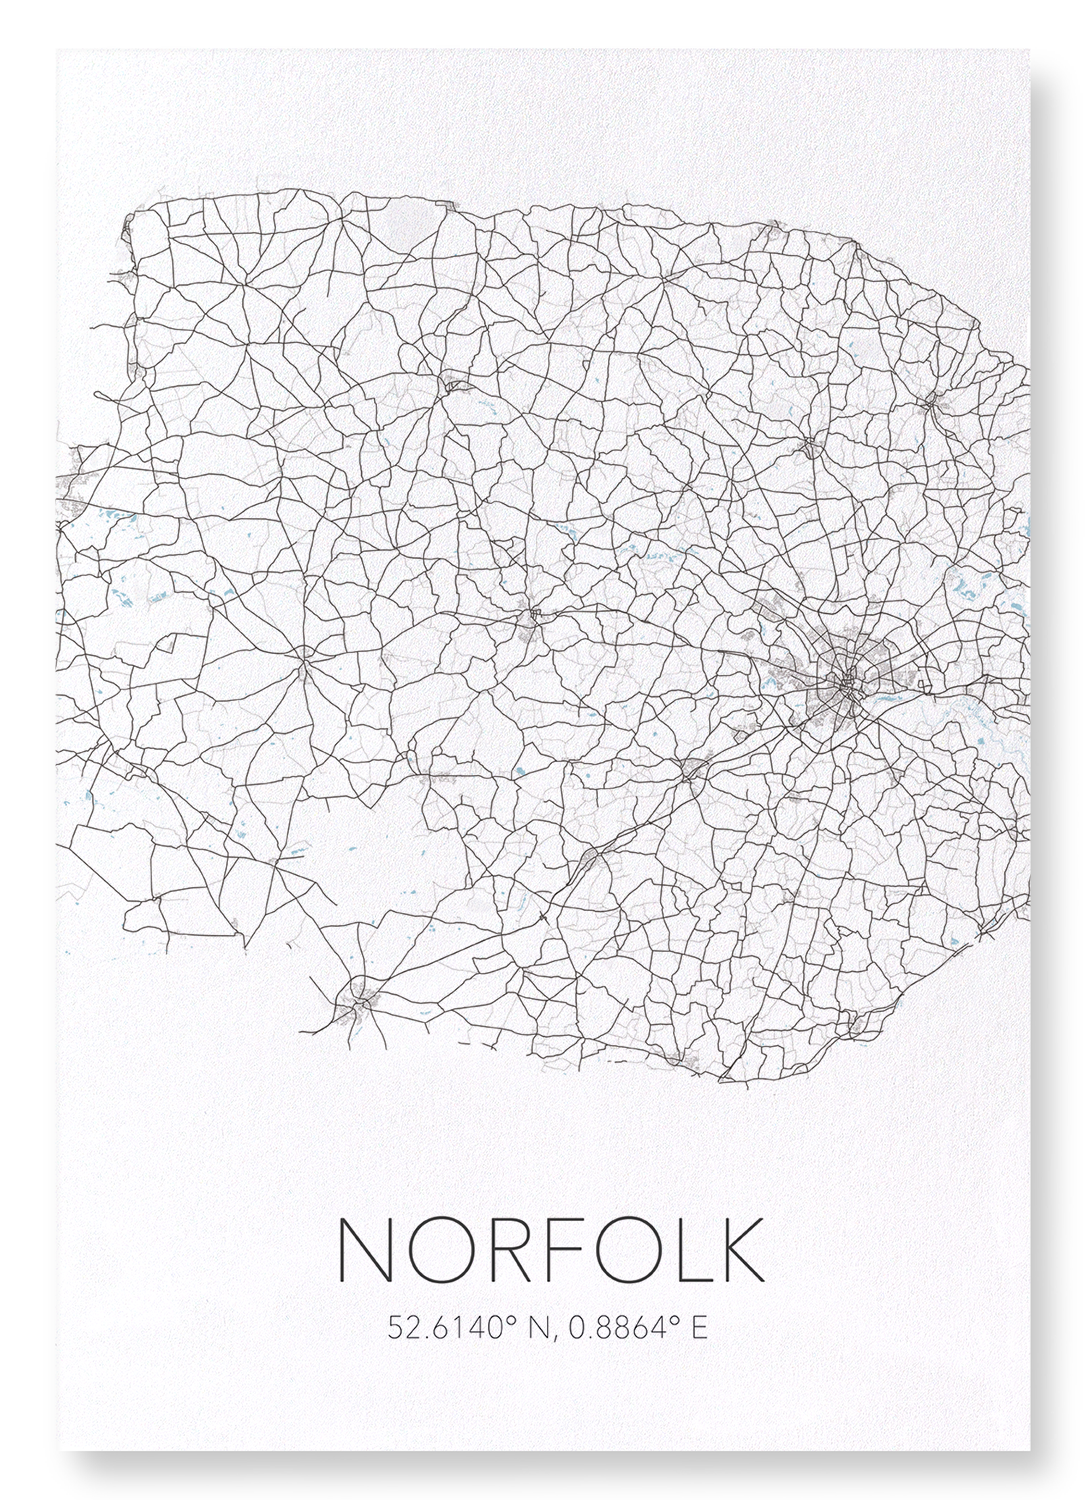 NORFOLK CUTOUT: Map Cutout Art Print